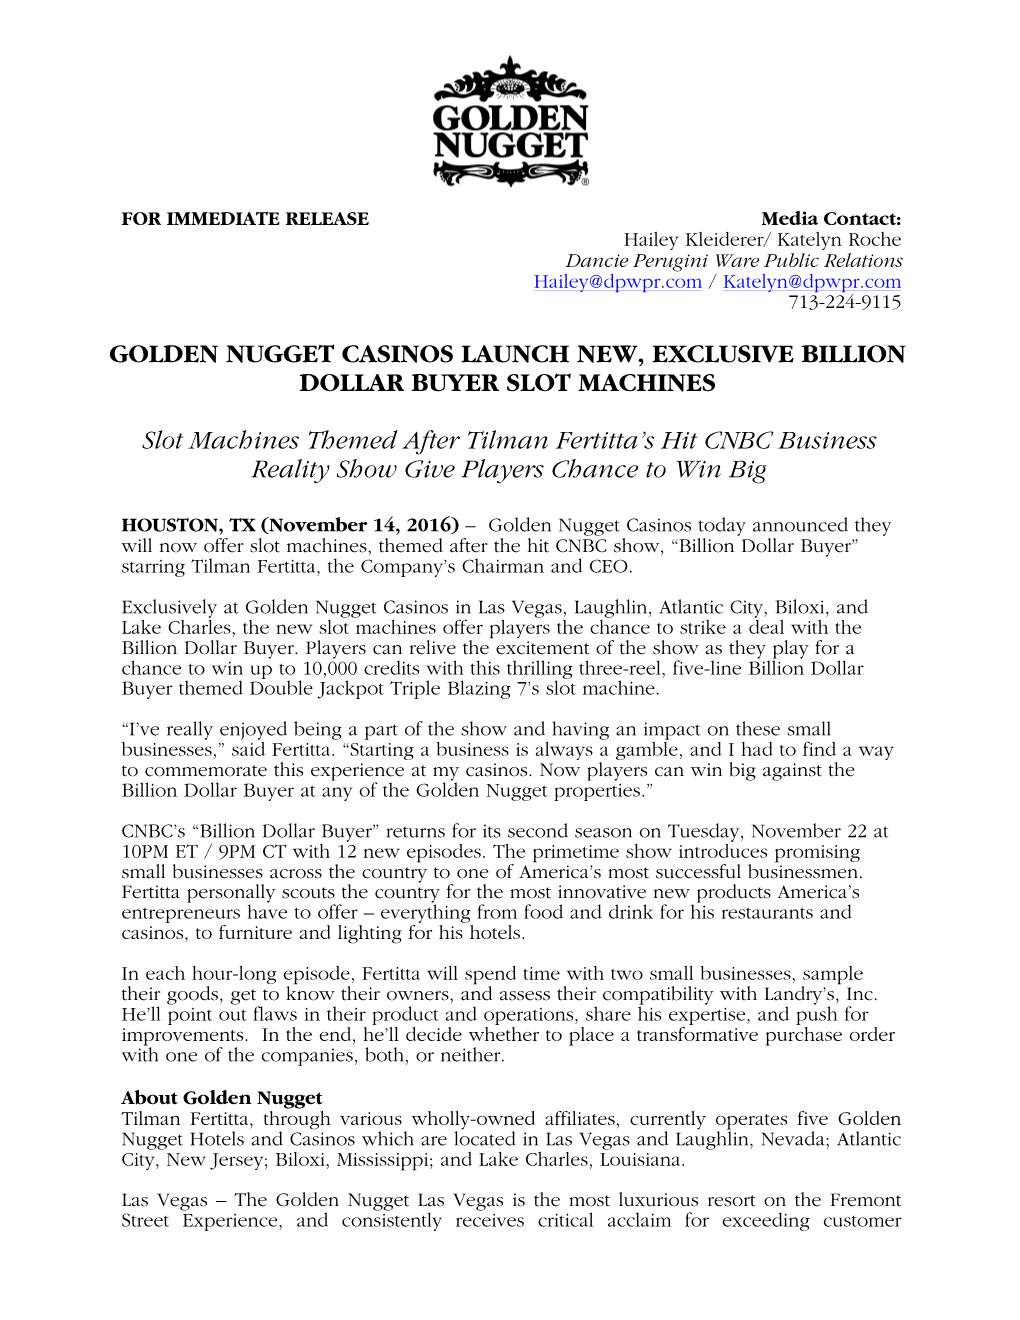 Golden Nugget Casinos Launch New, Exclusive Billion Dollar Buyer Slot Machines